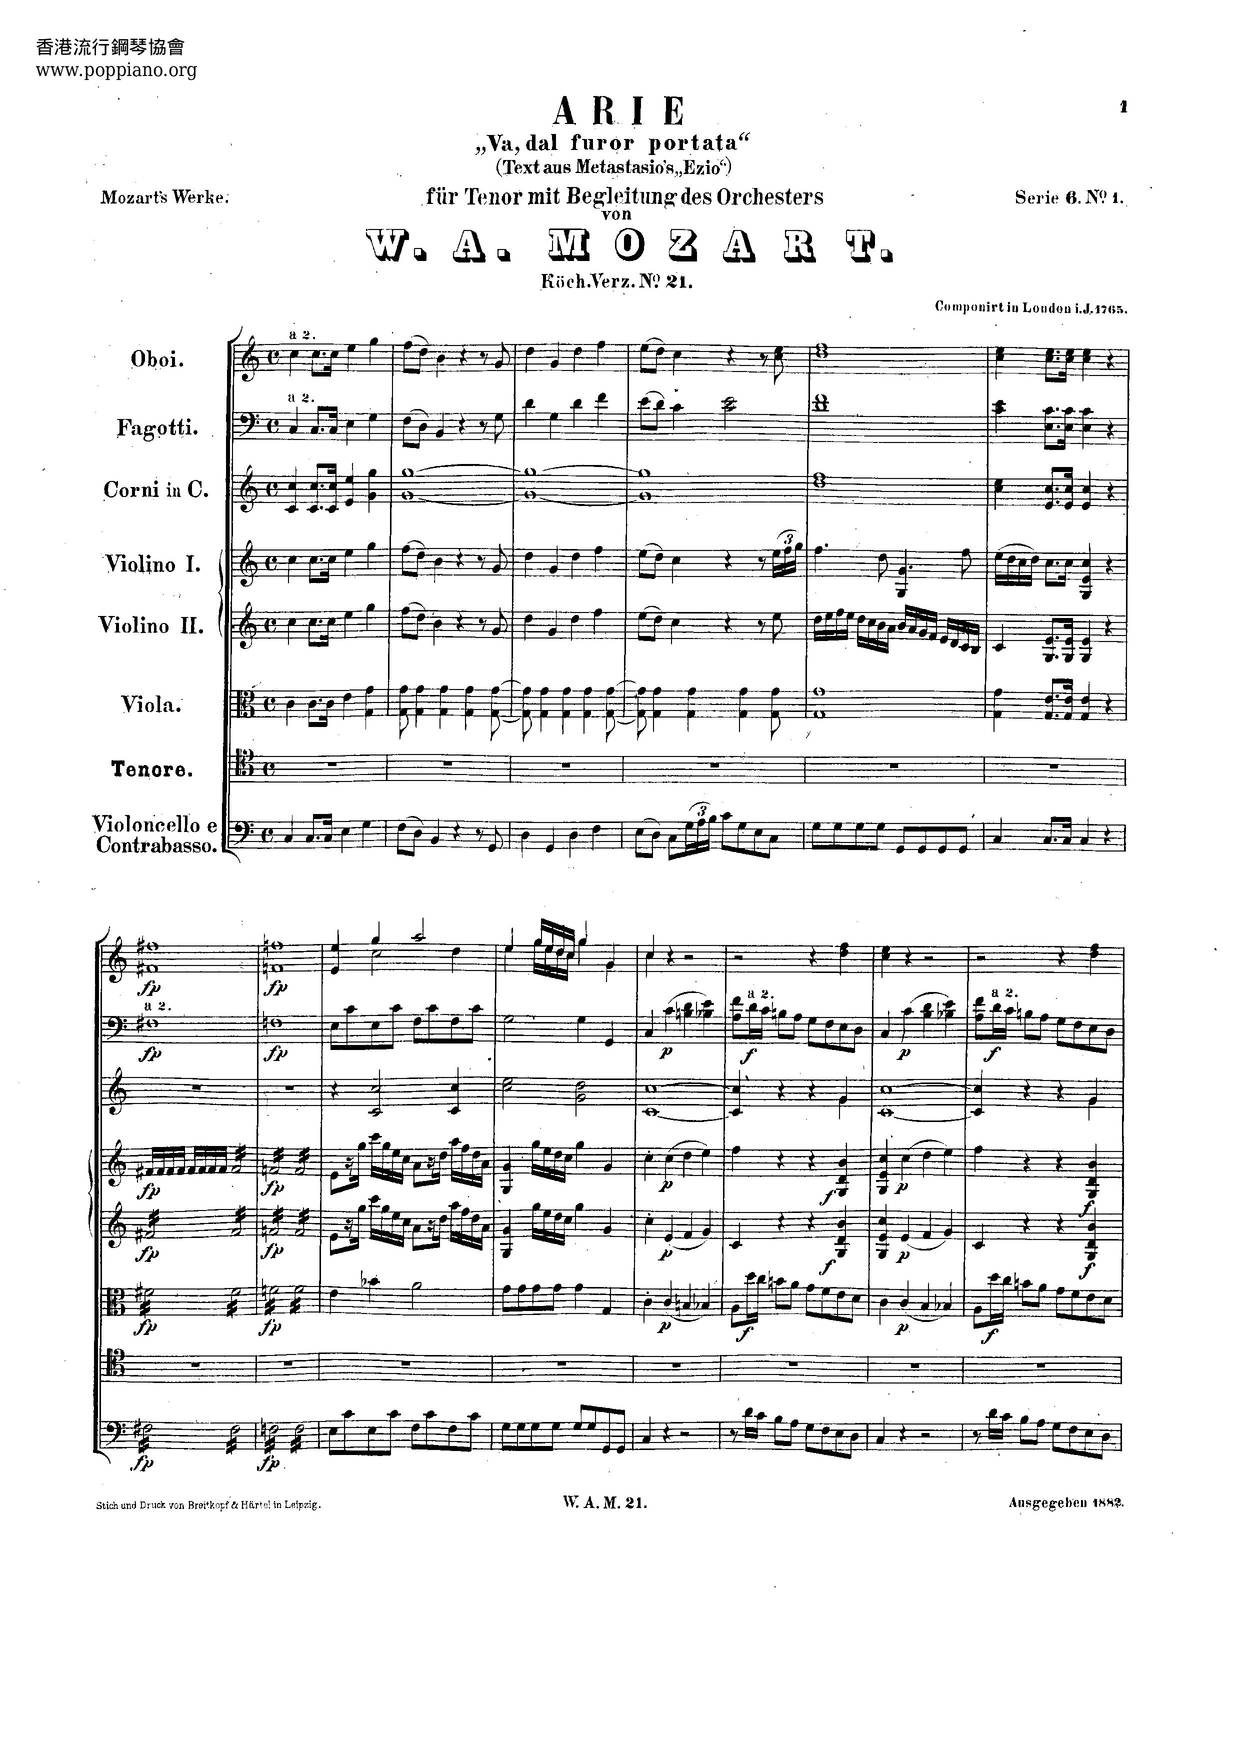 Va, Dal Furor Portata, K. 21/19Cピアノ譜